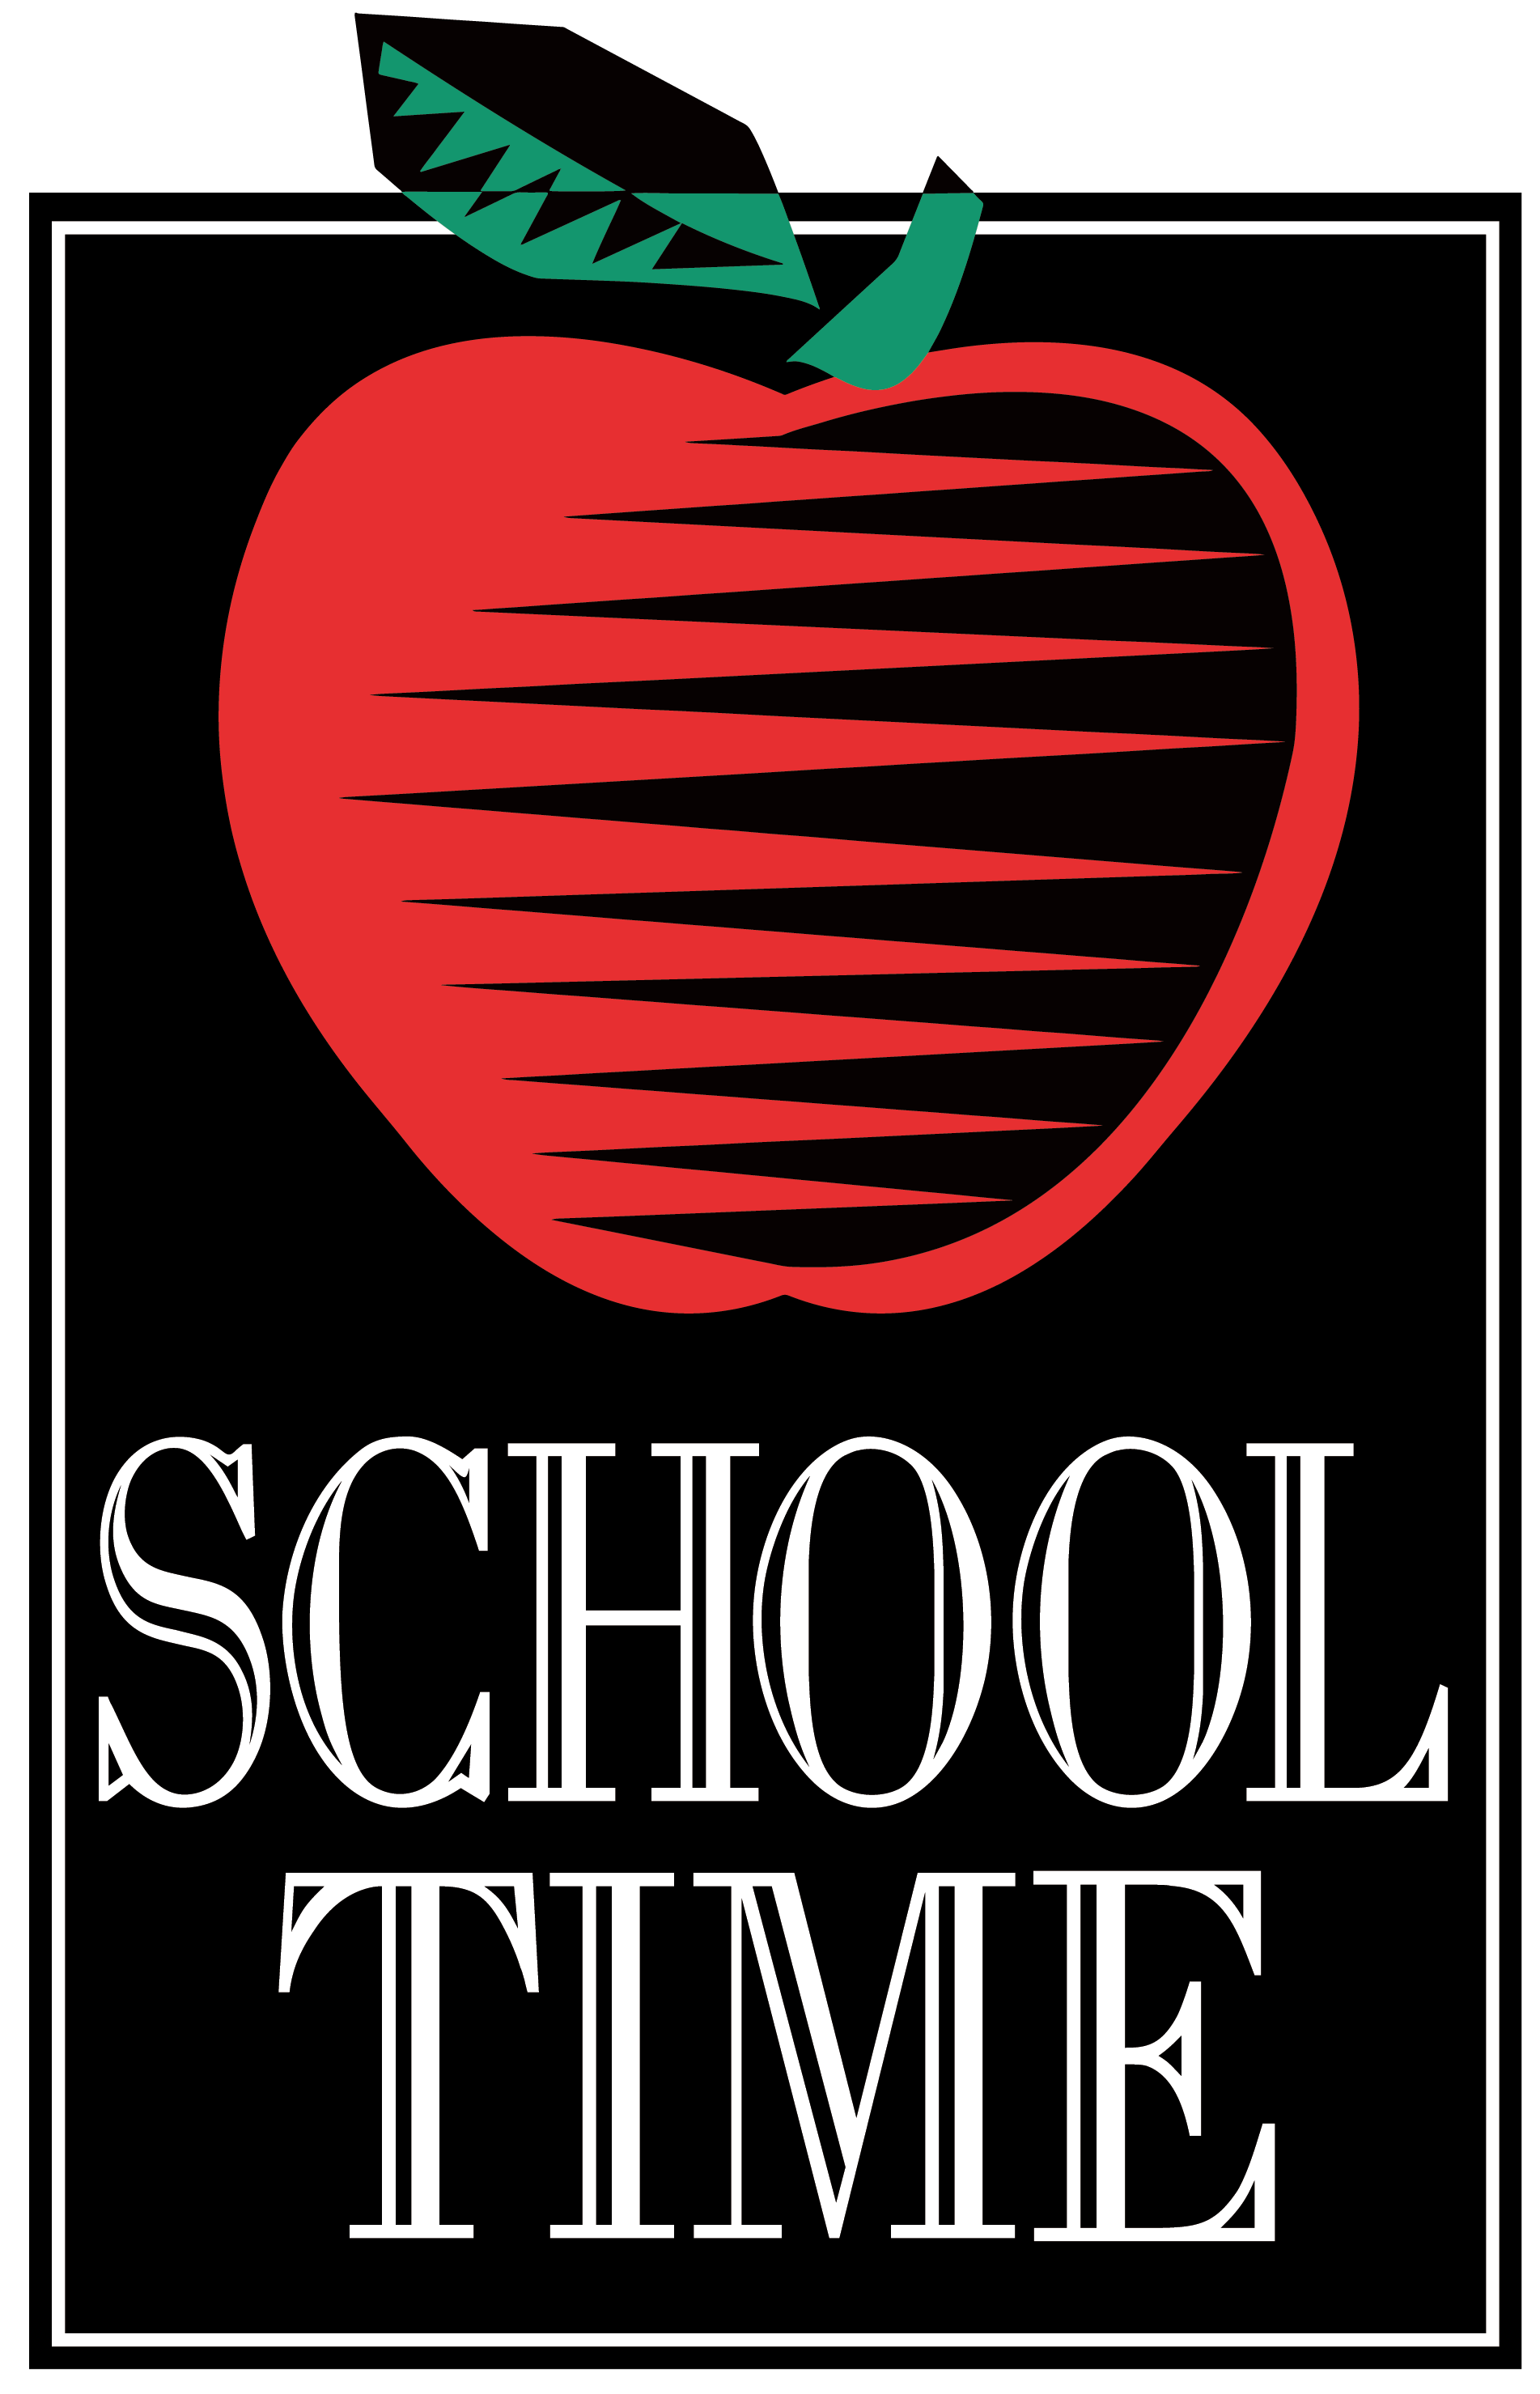 School Time main logo 2019.png